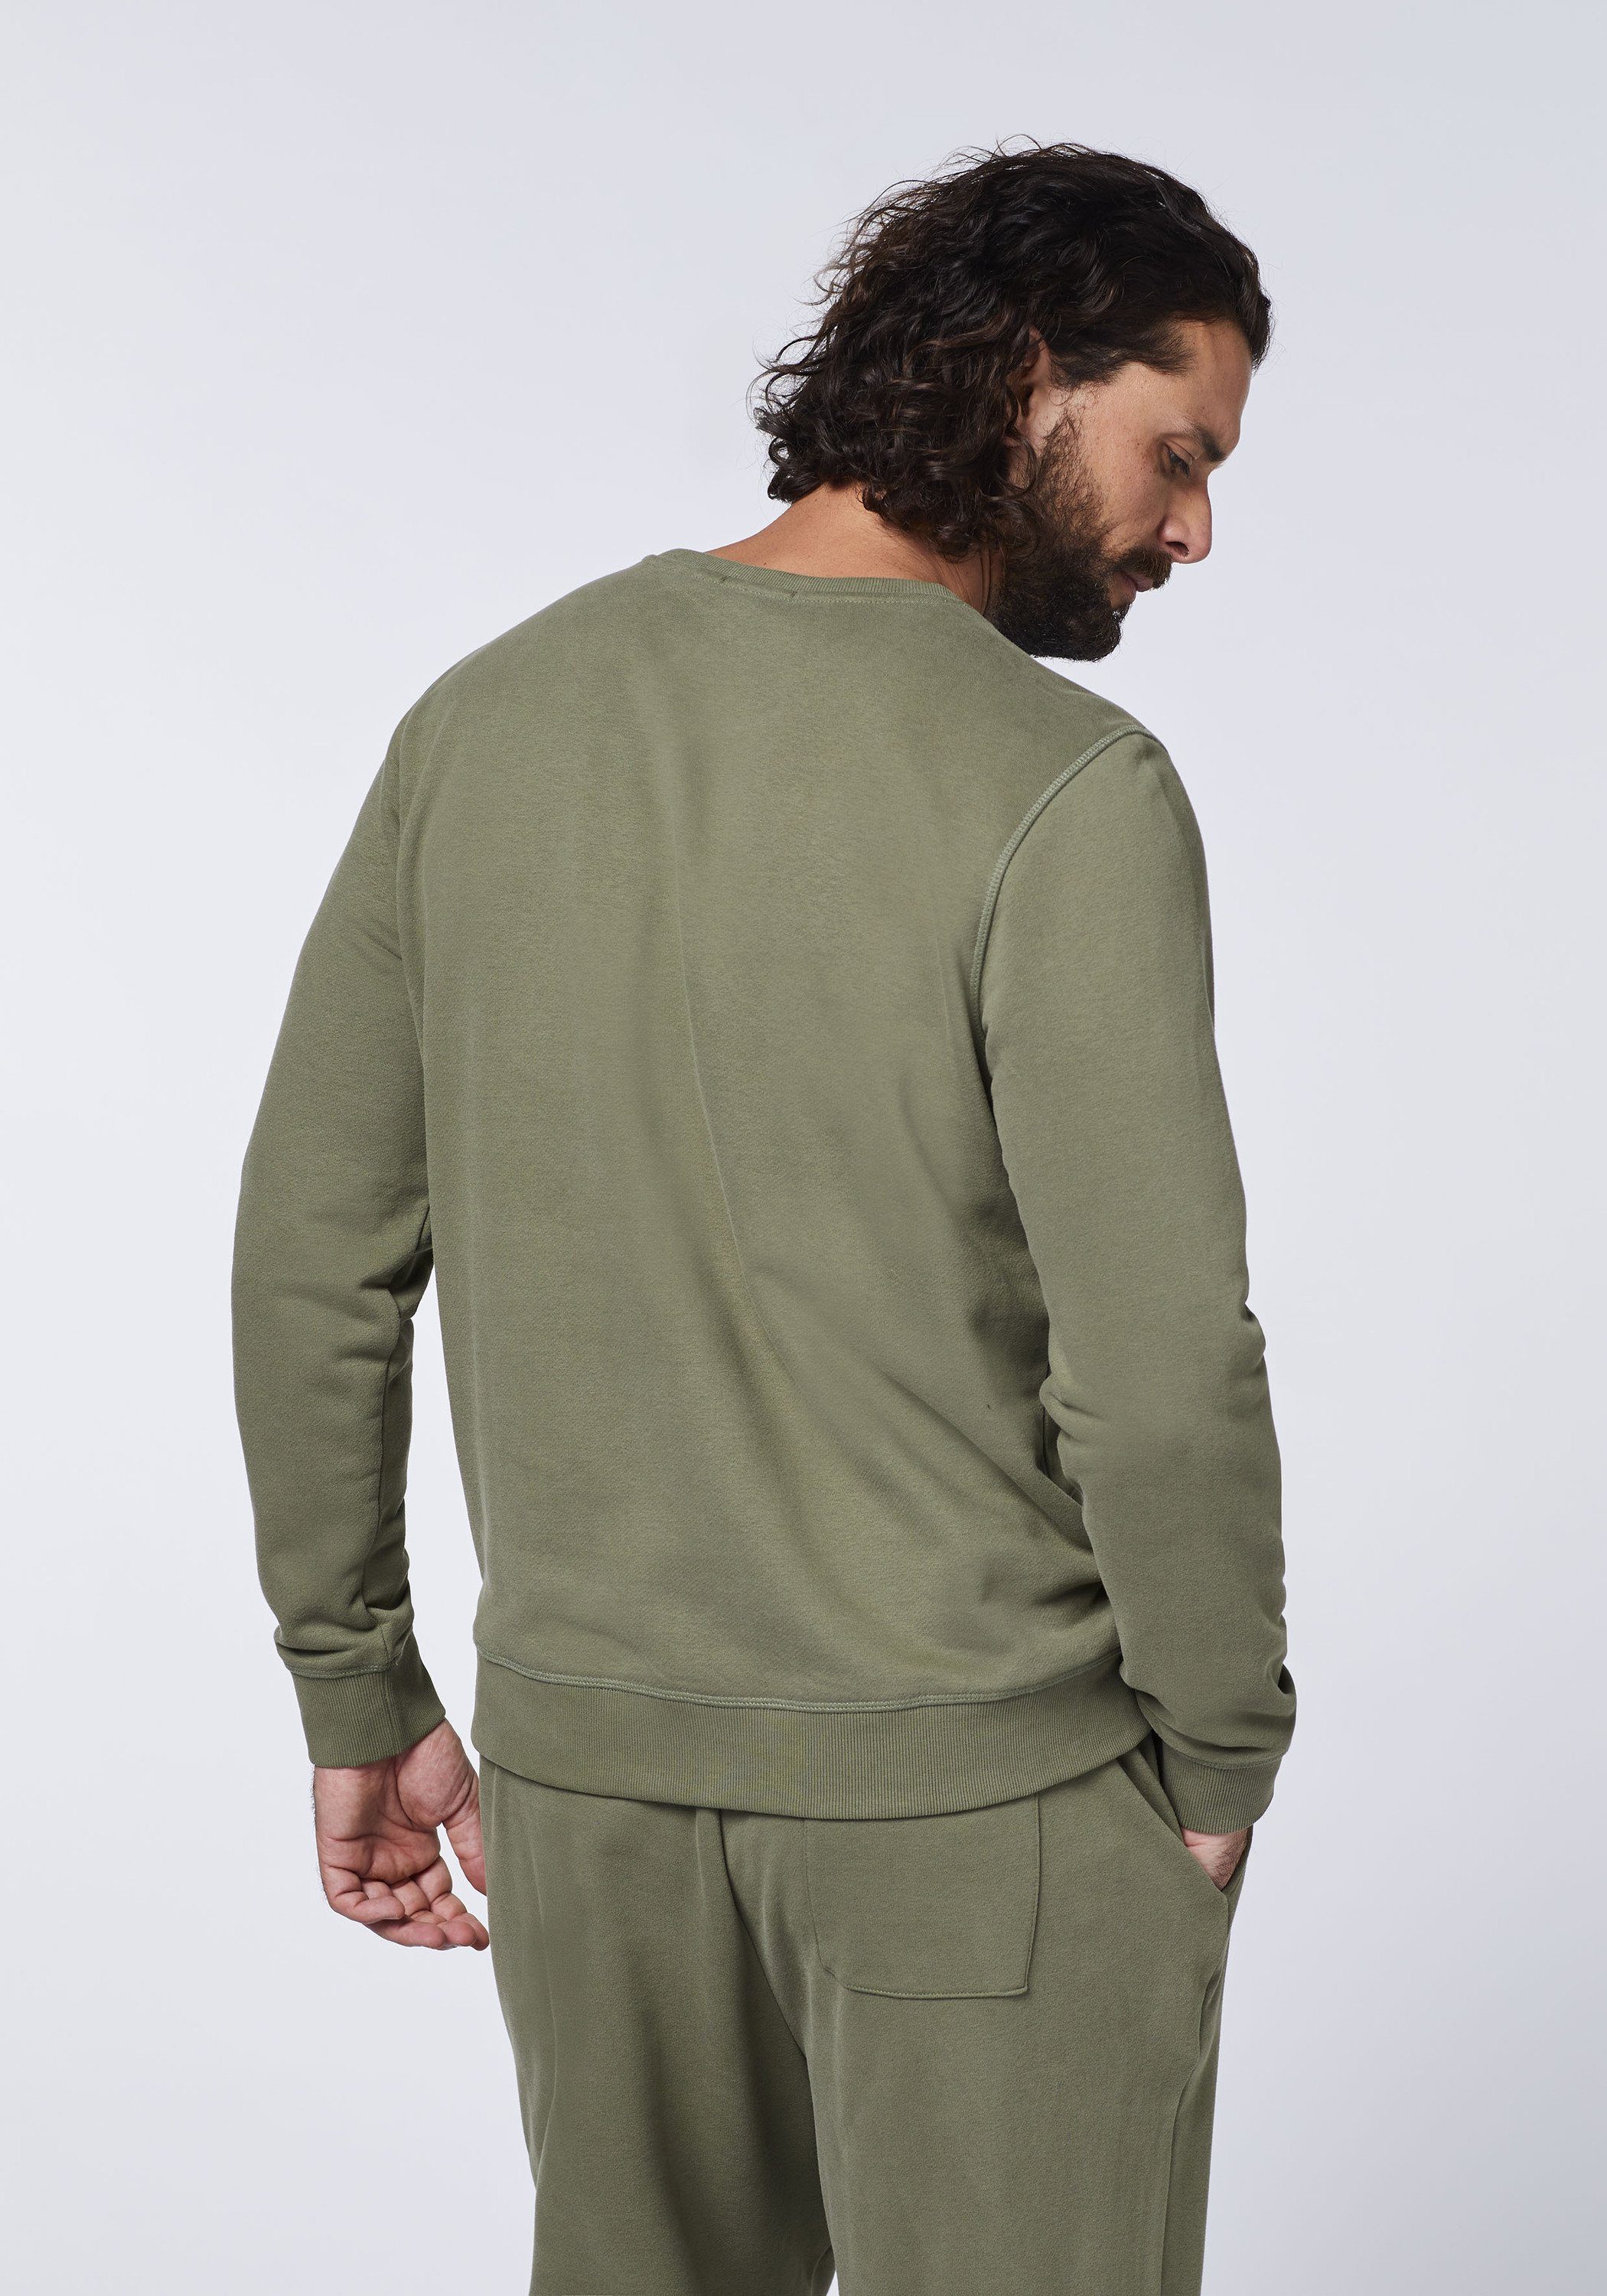 im Dusty Label-Look 18-0515 1 Sweatshirt Sweater Chiemsee Olive